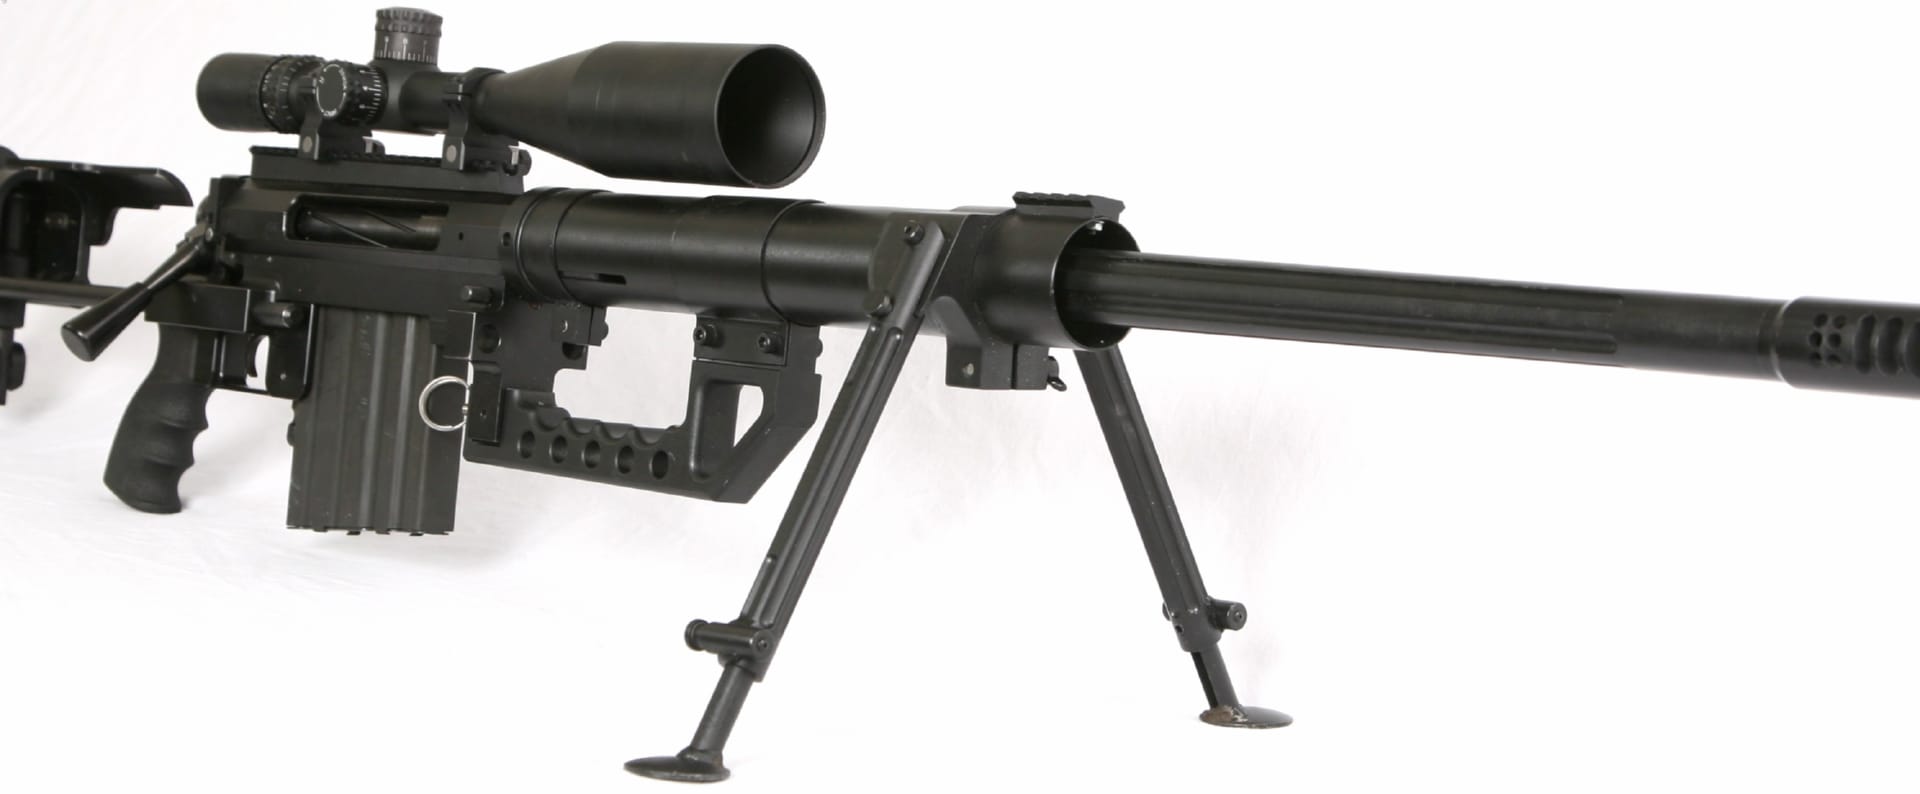 Cheytac M200 Intervention Sniper Rifle Wallpaper HD Download